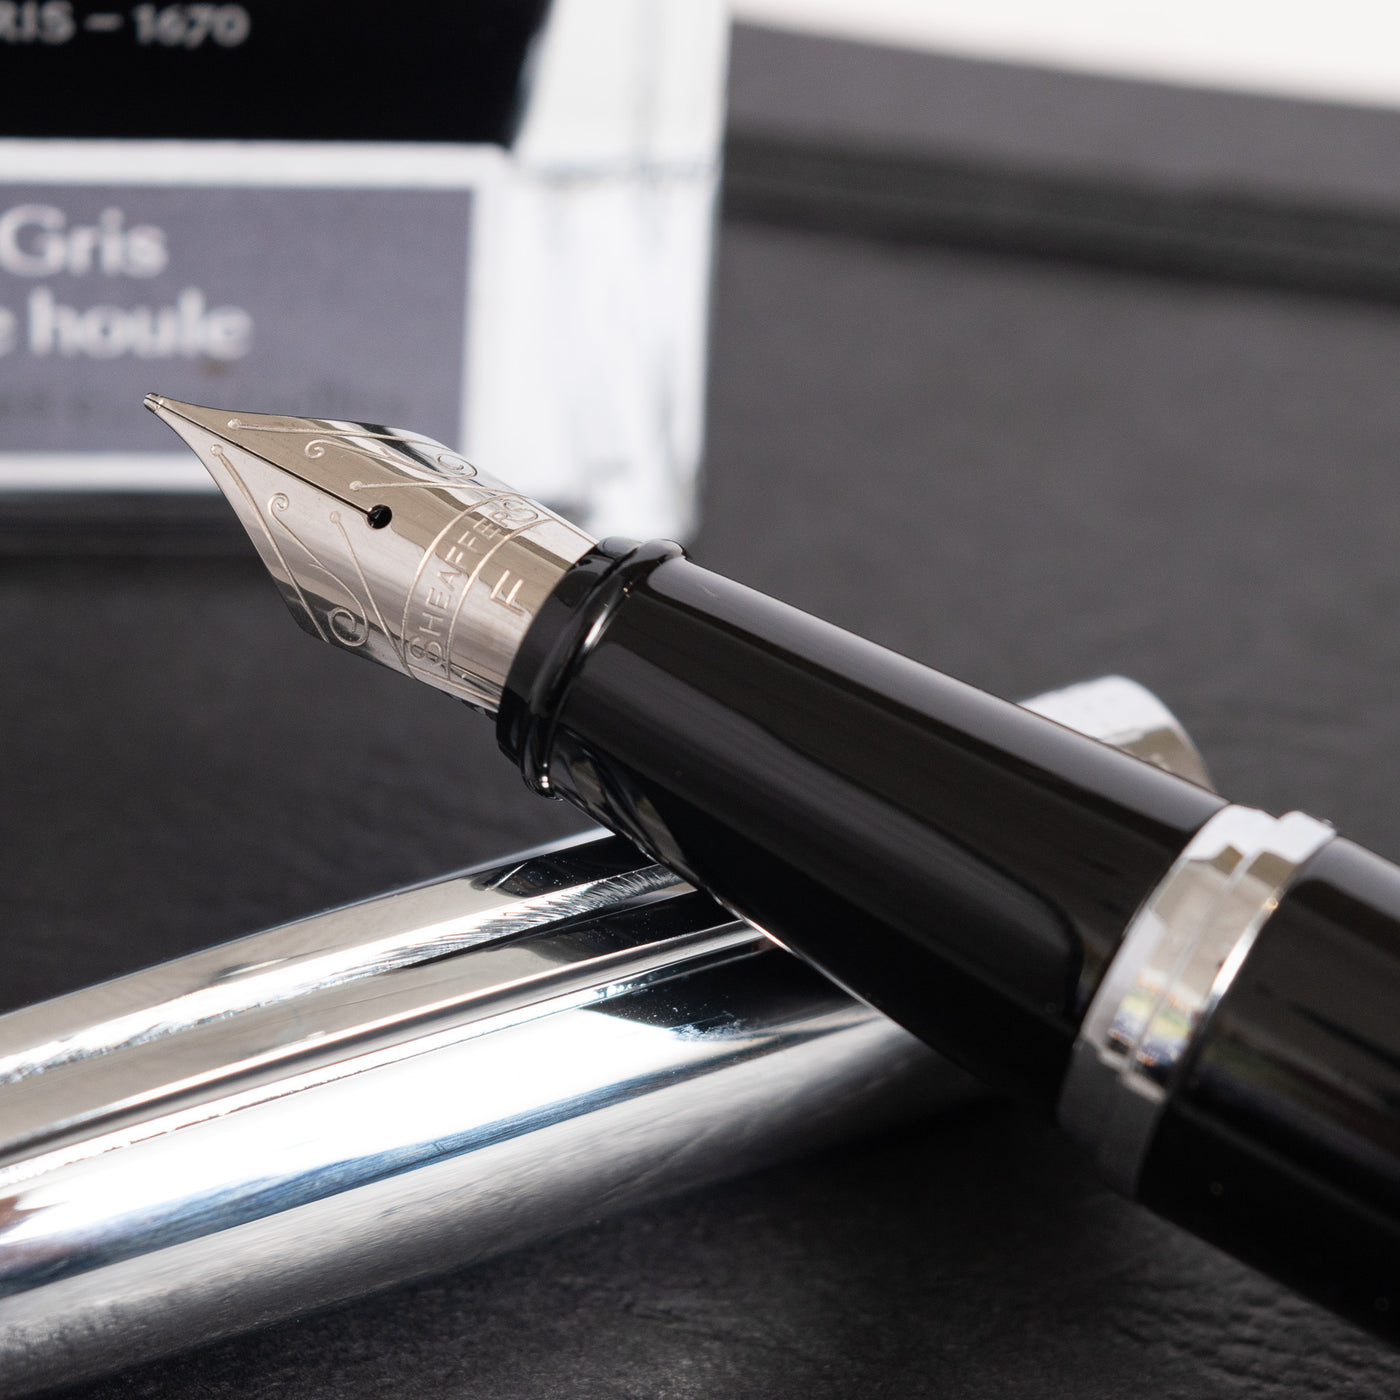 Sheaffer 300 Fountain Pen - Black Barrel with Chrome Cap stainless steel nib